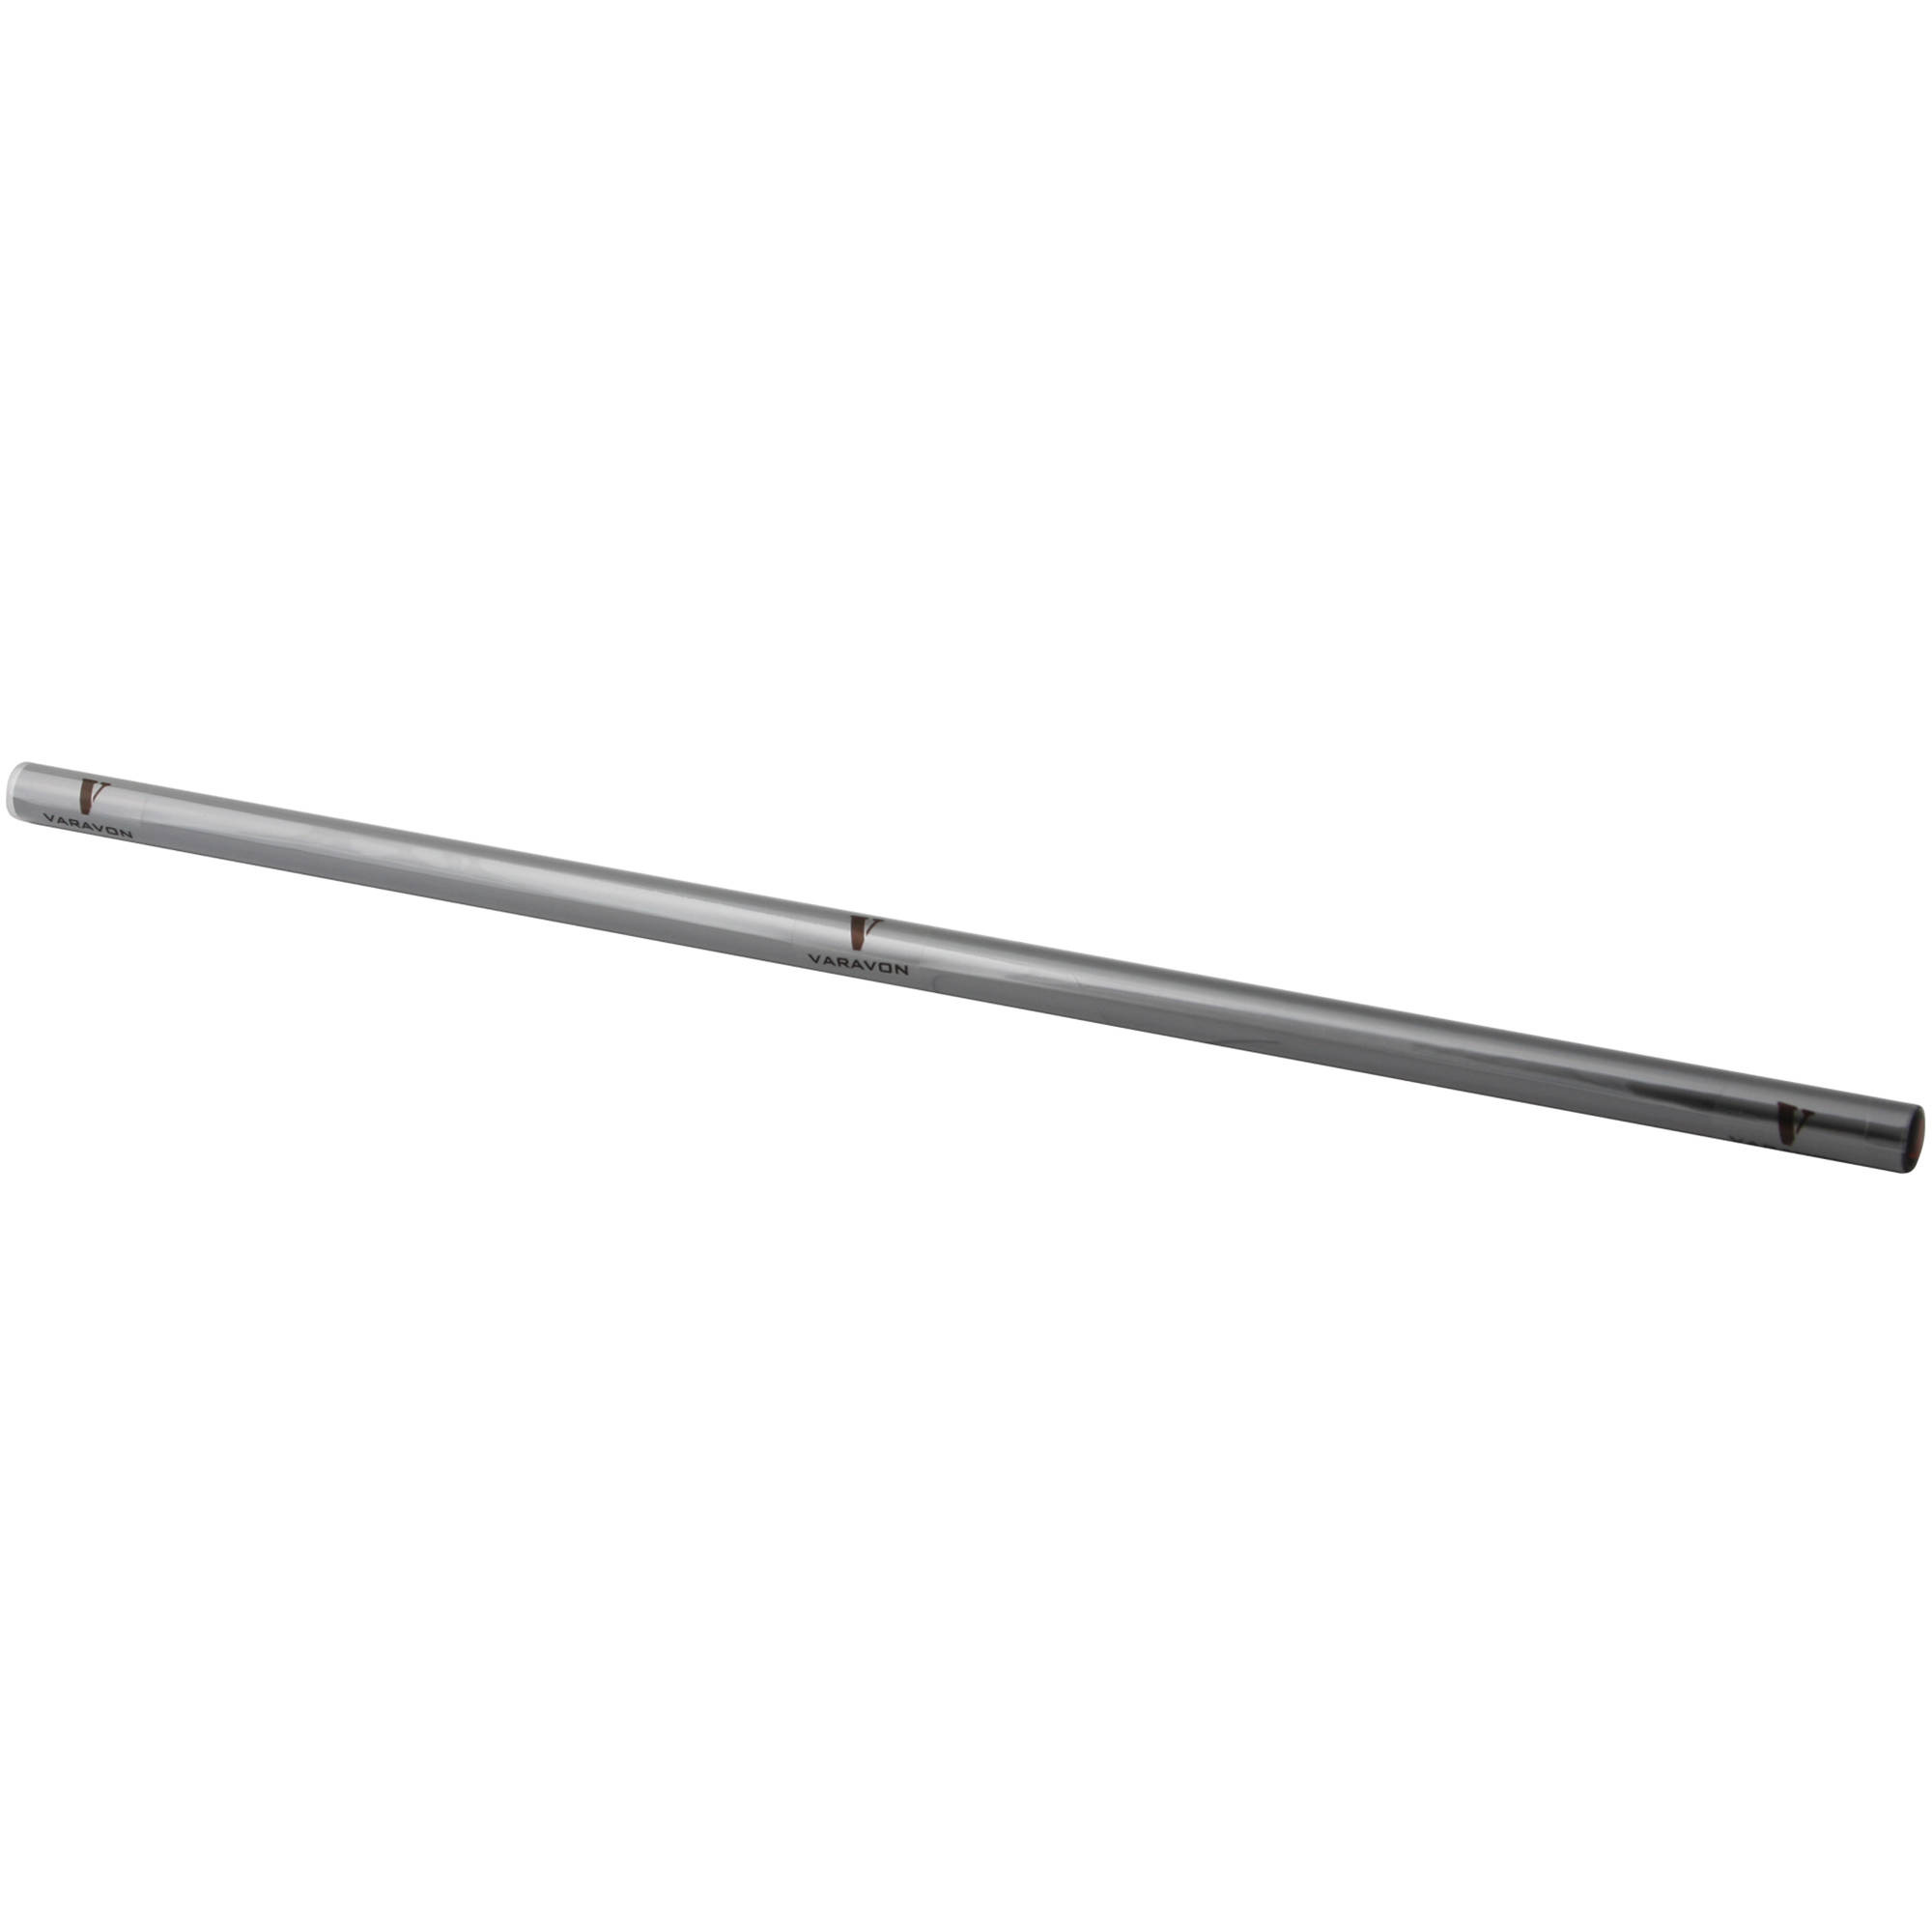 Varavon 15mm Carbon Rod (20")